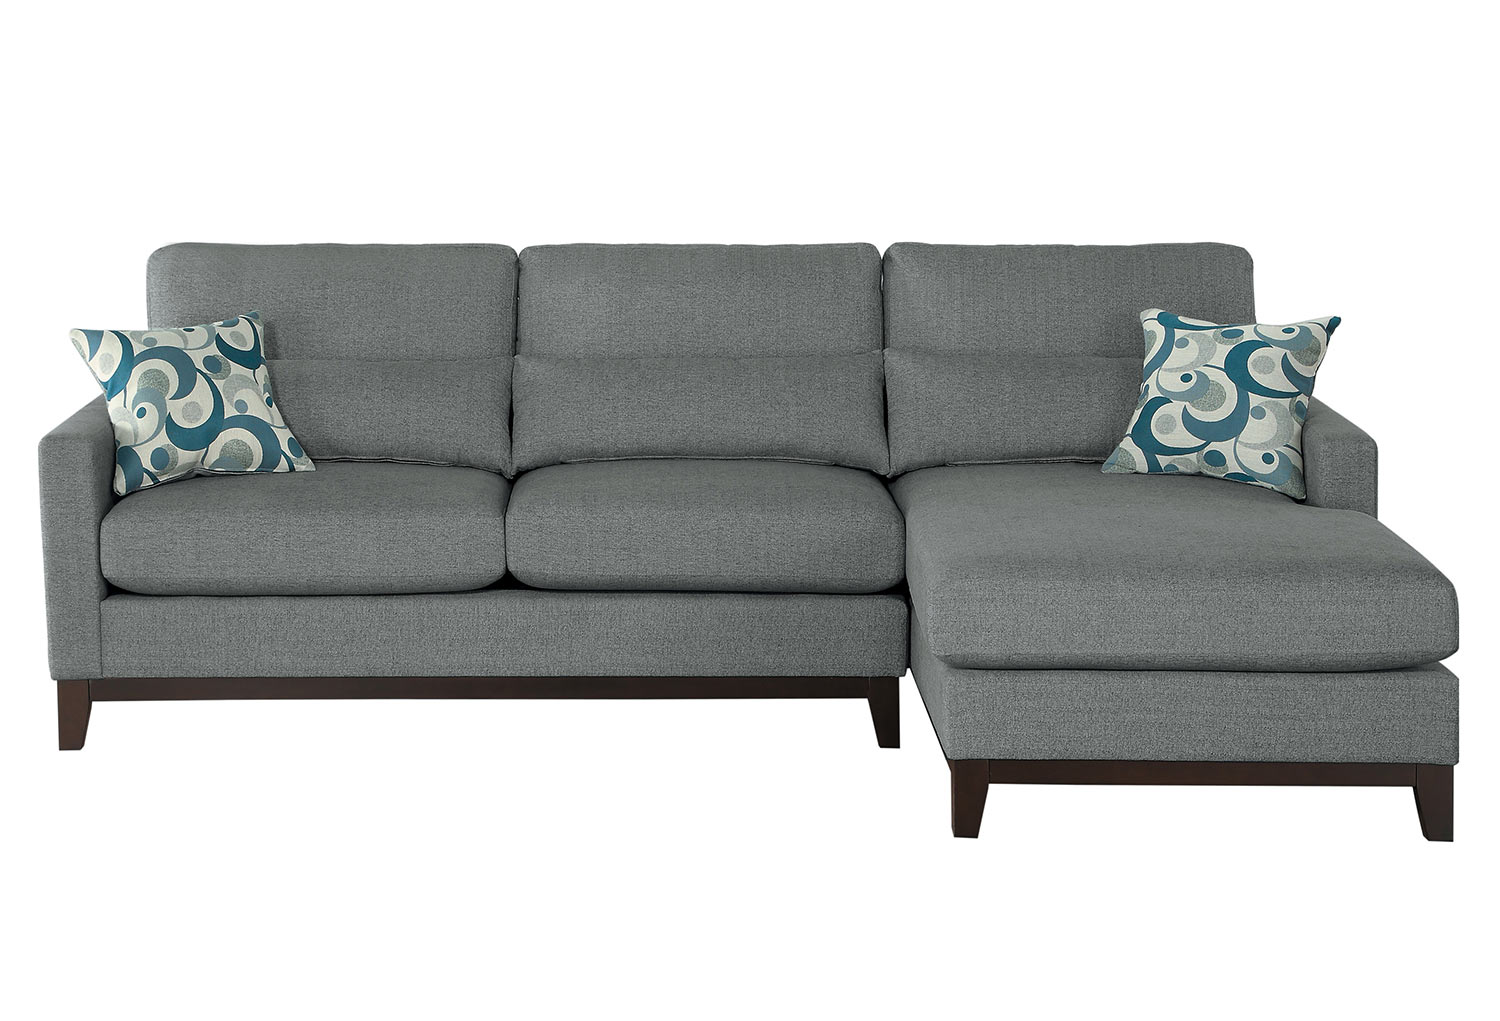 Homelegance Greerman Sectional Sofa Set - Gray